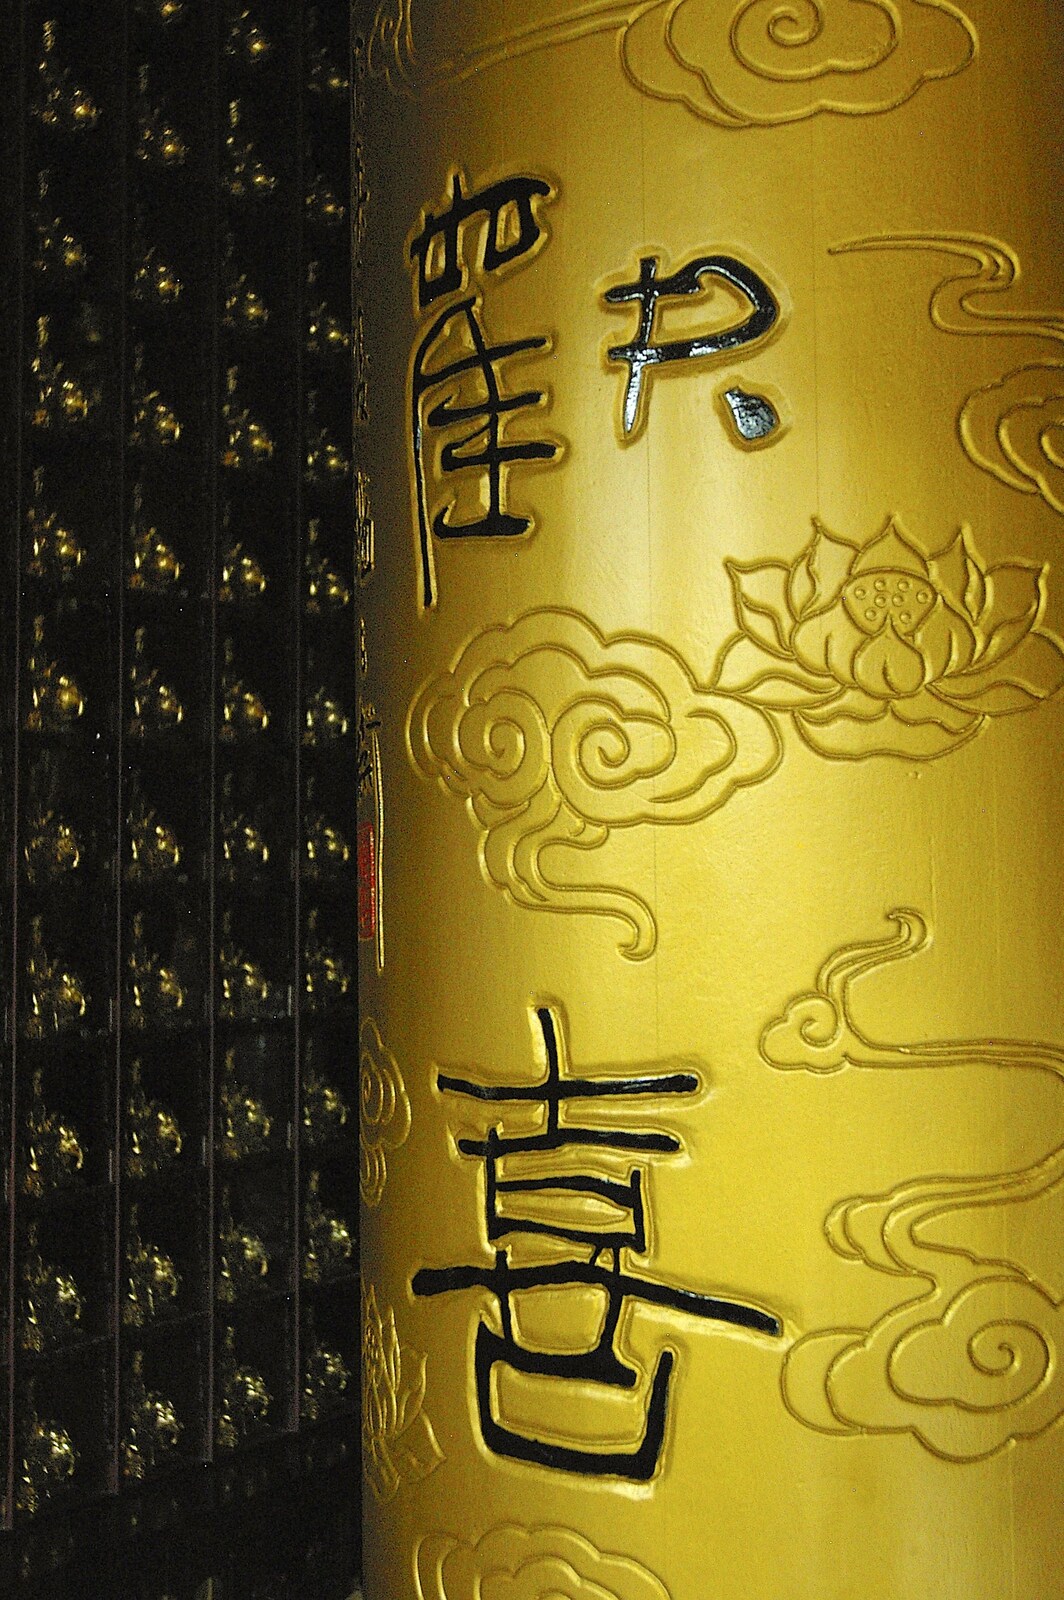 A golden column from A Few Days in Nanjing, Jiangsu Province, China - 7th October 2006